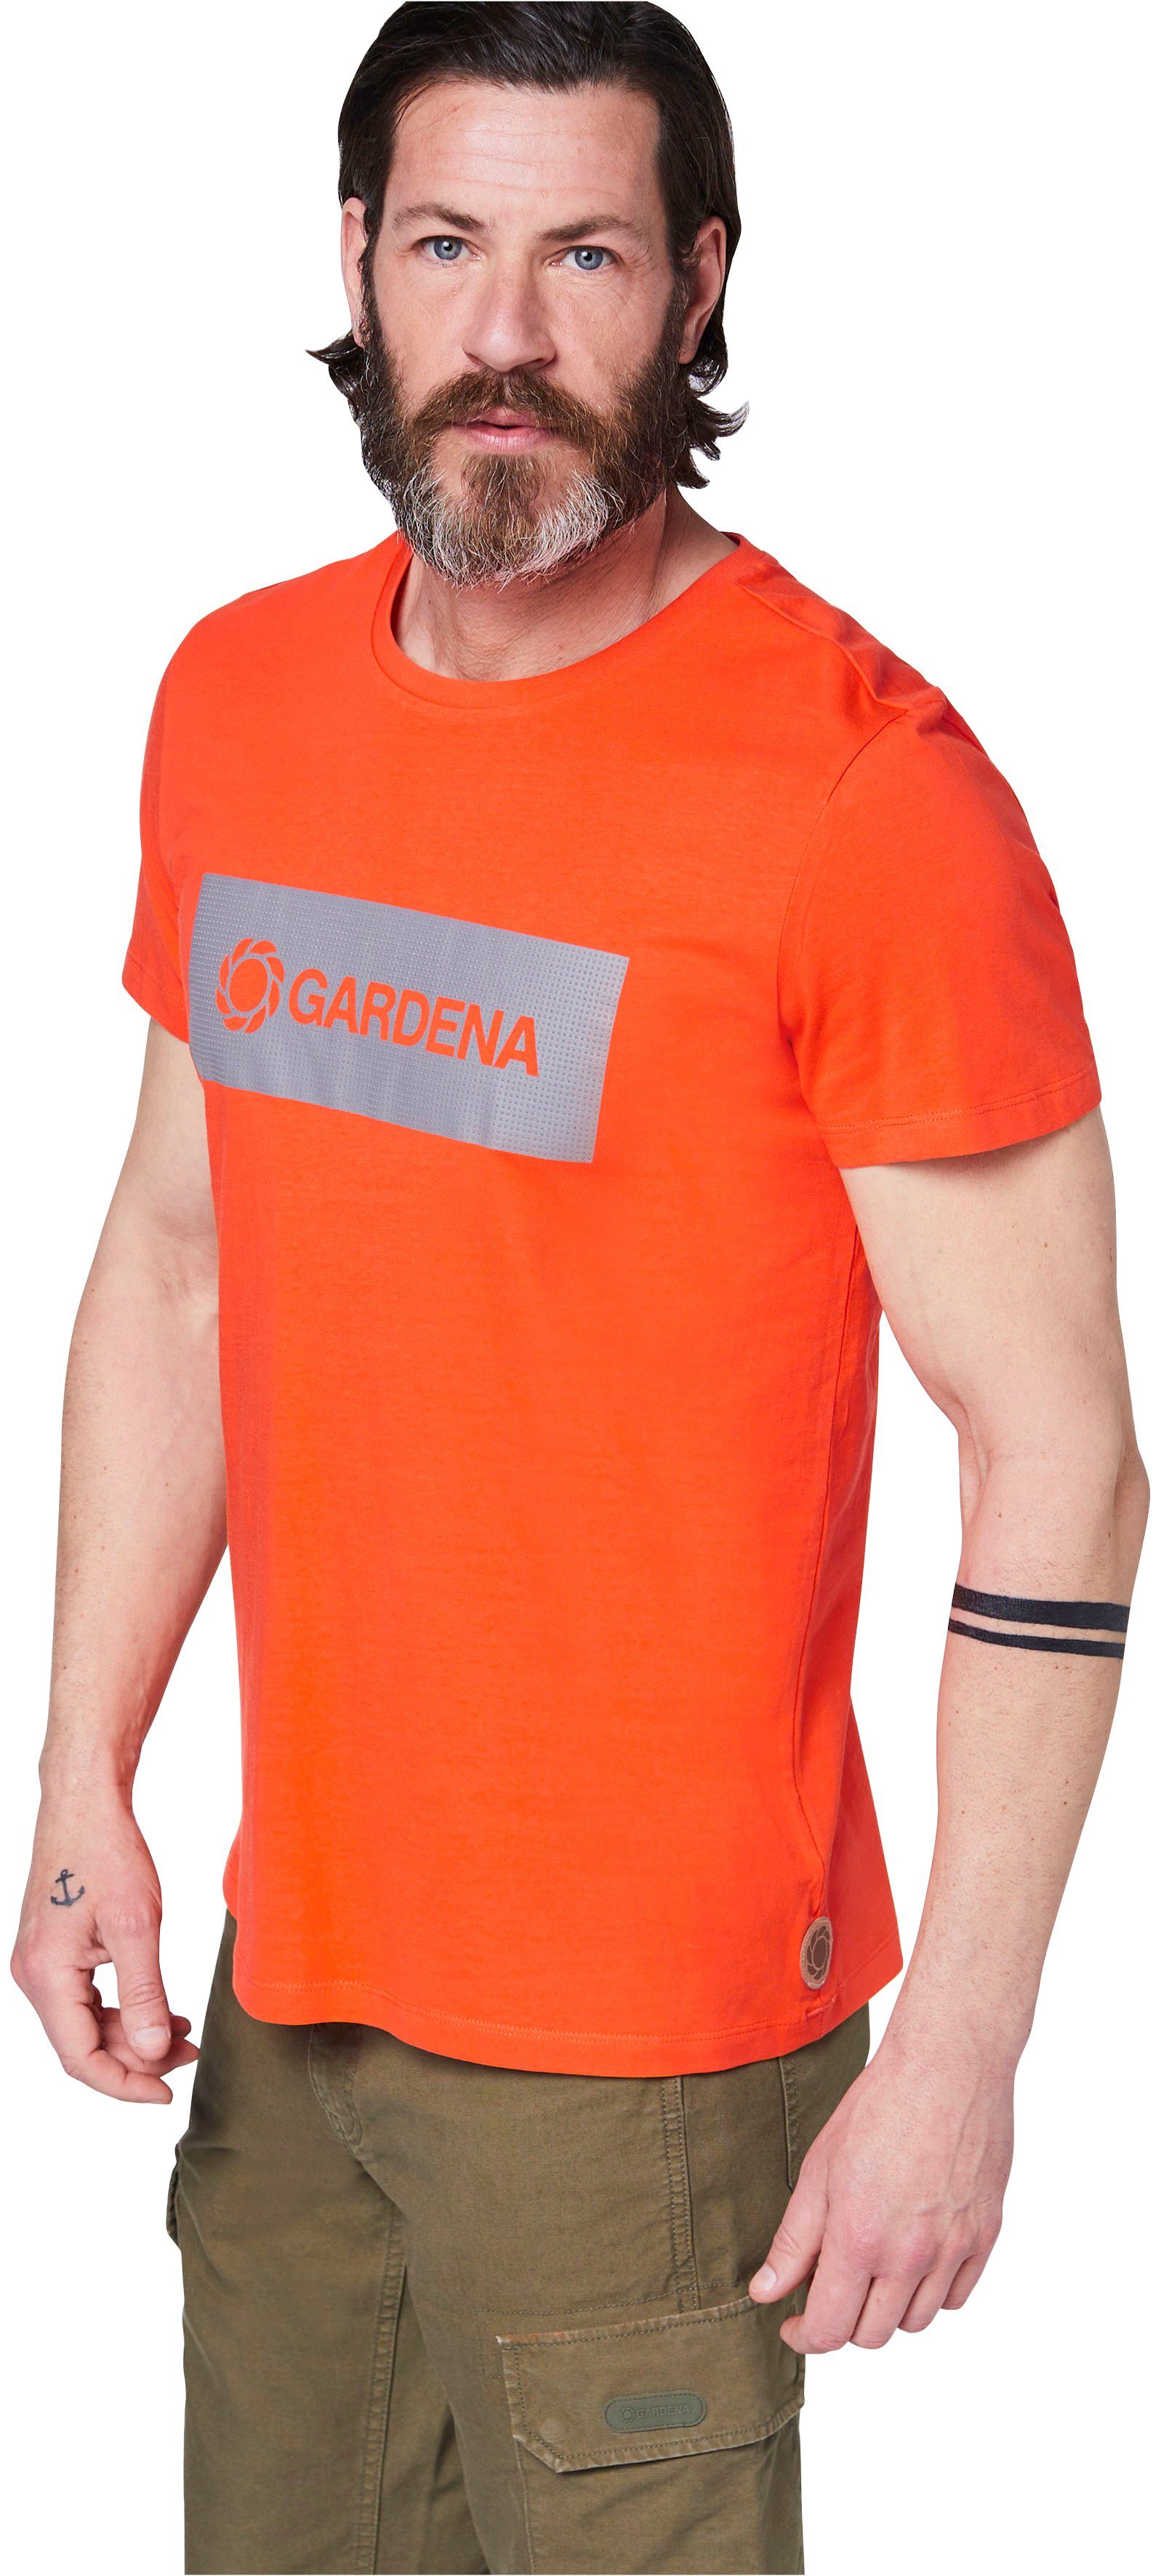 GARDENA T-Shirt Flame mit Gardena-Logodruck